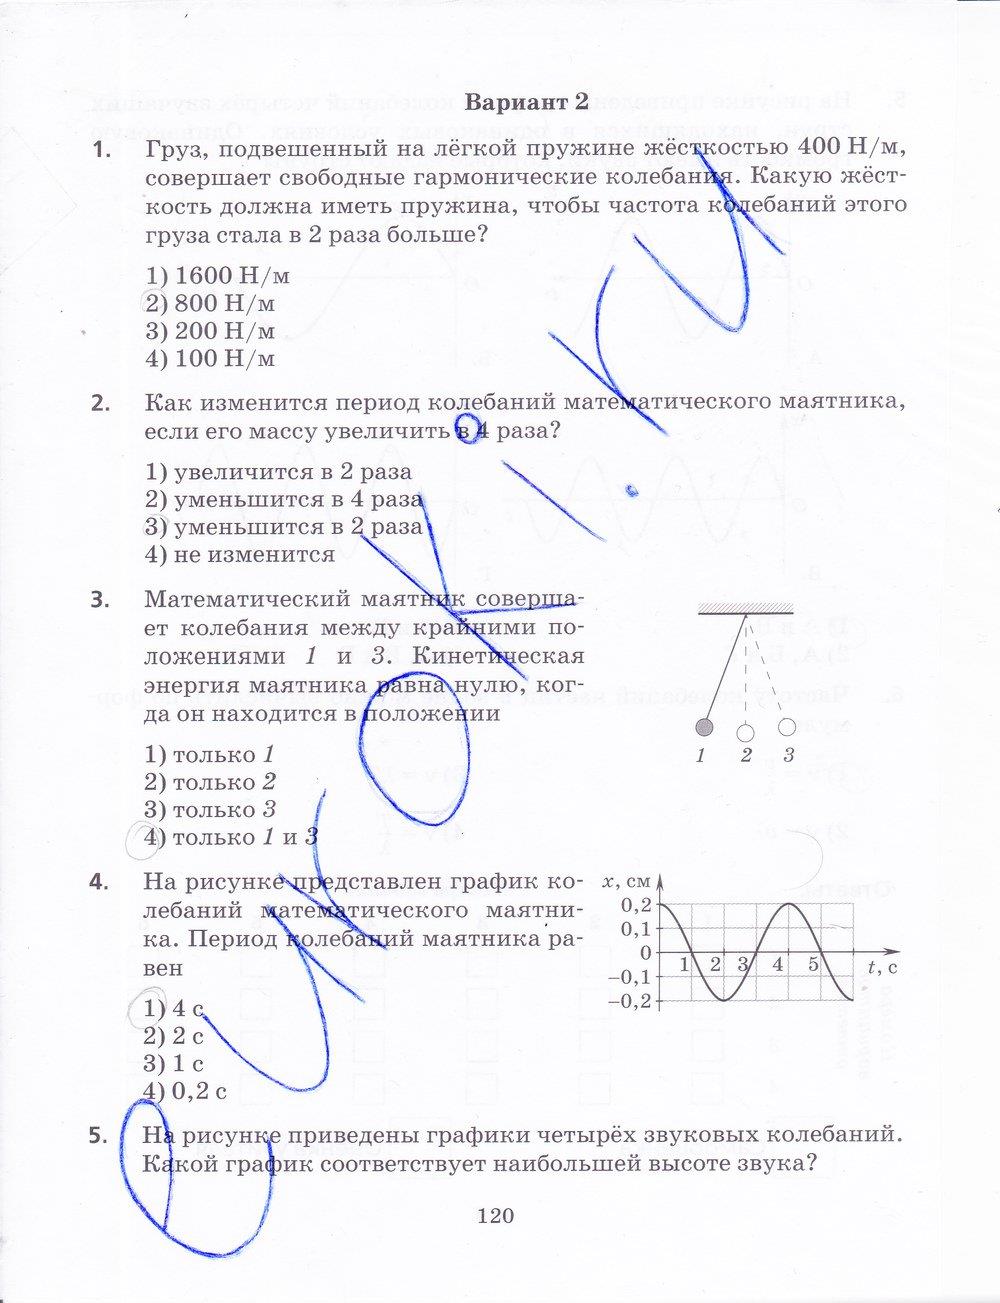 гдз 9 класс рабочая тетрадь страница 120 физика Пурышева, Важеевская, Чаругин